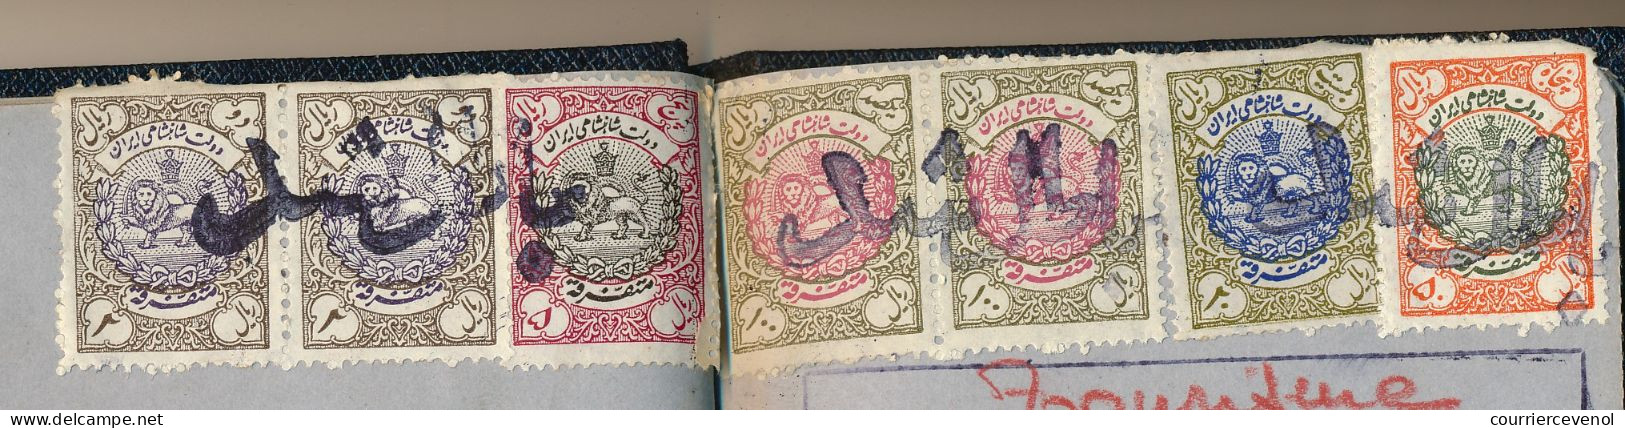 FRANCE - Passeport Préfecture Moselle 1959/1953, Visas USA, IRAN, HONK-KONG - Fiscaux France, Iran, Grande Bretagne